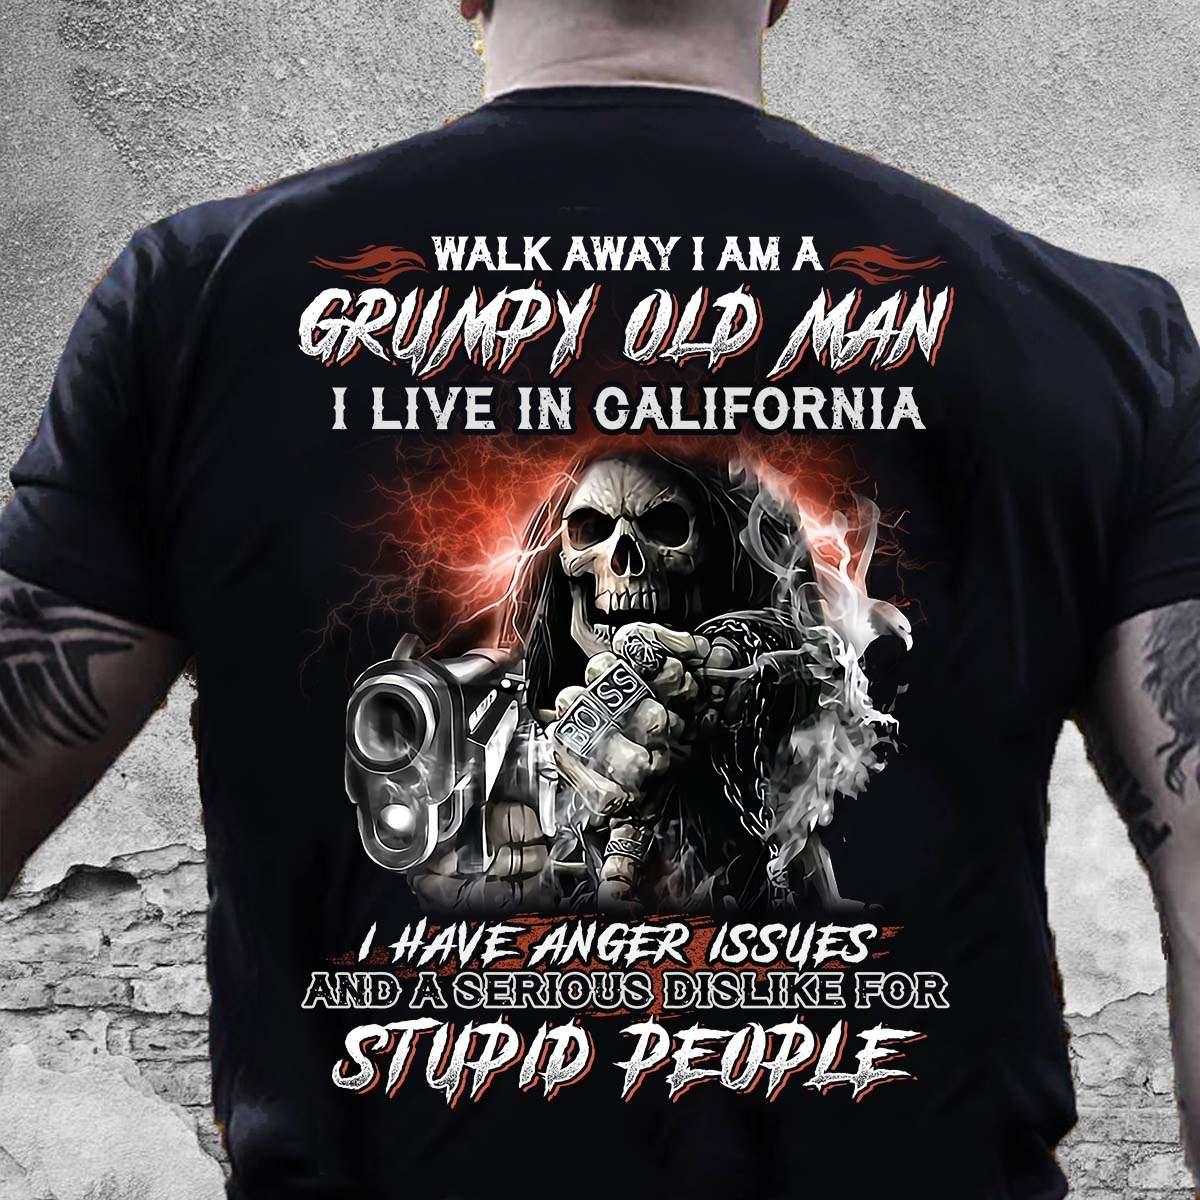 Wlak away I am a grumpy old man I live in California - Evil with gun